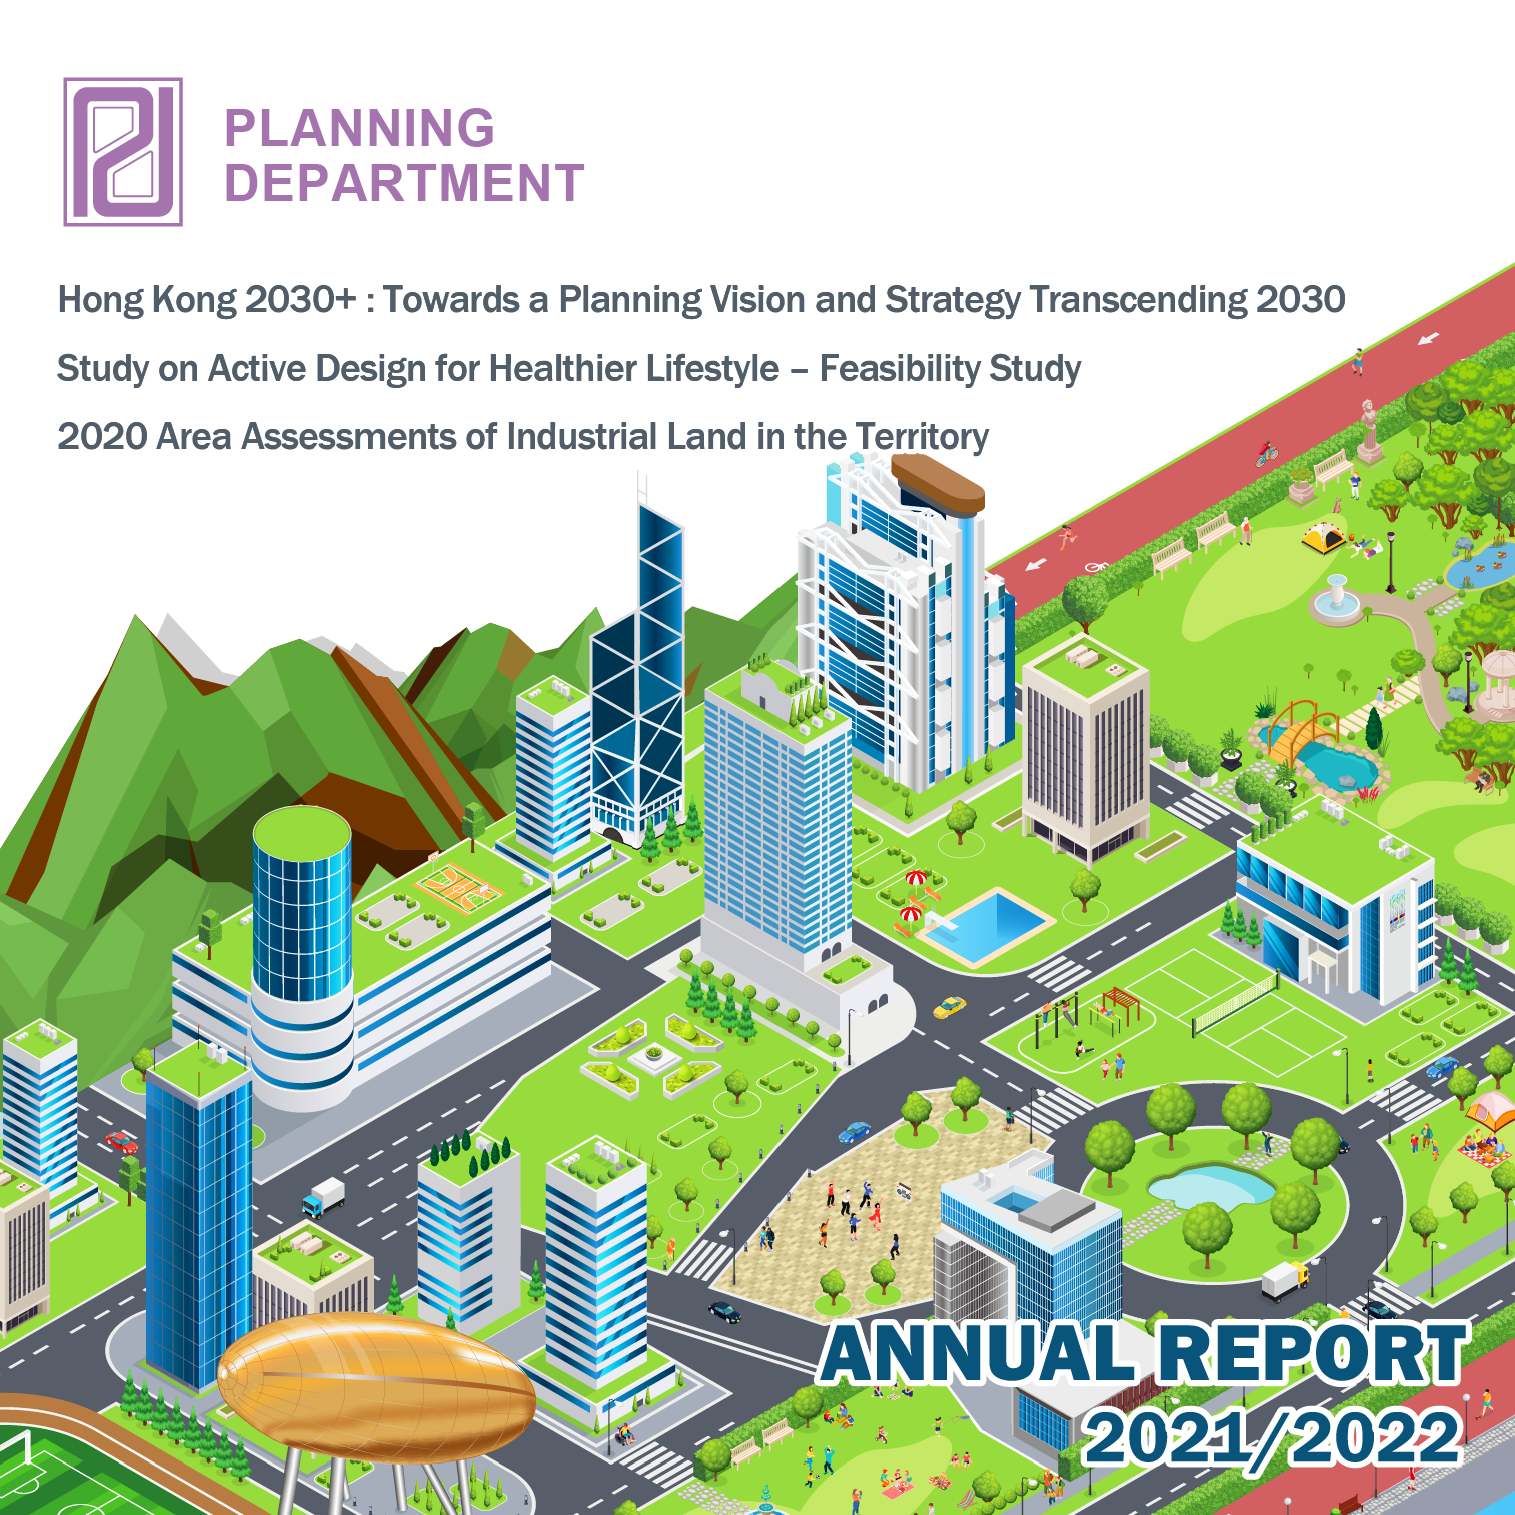 2021/2022 Annual Report